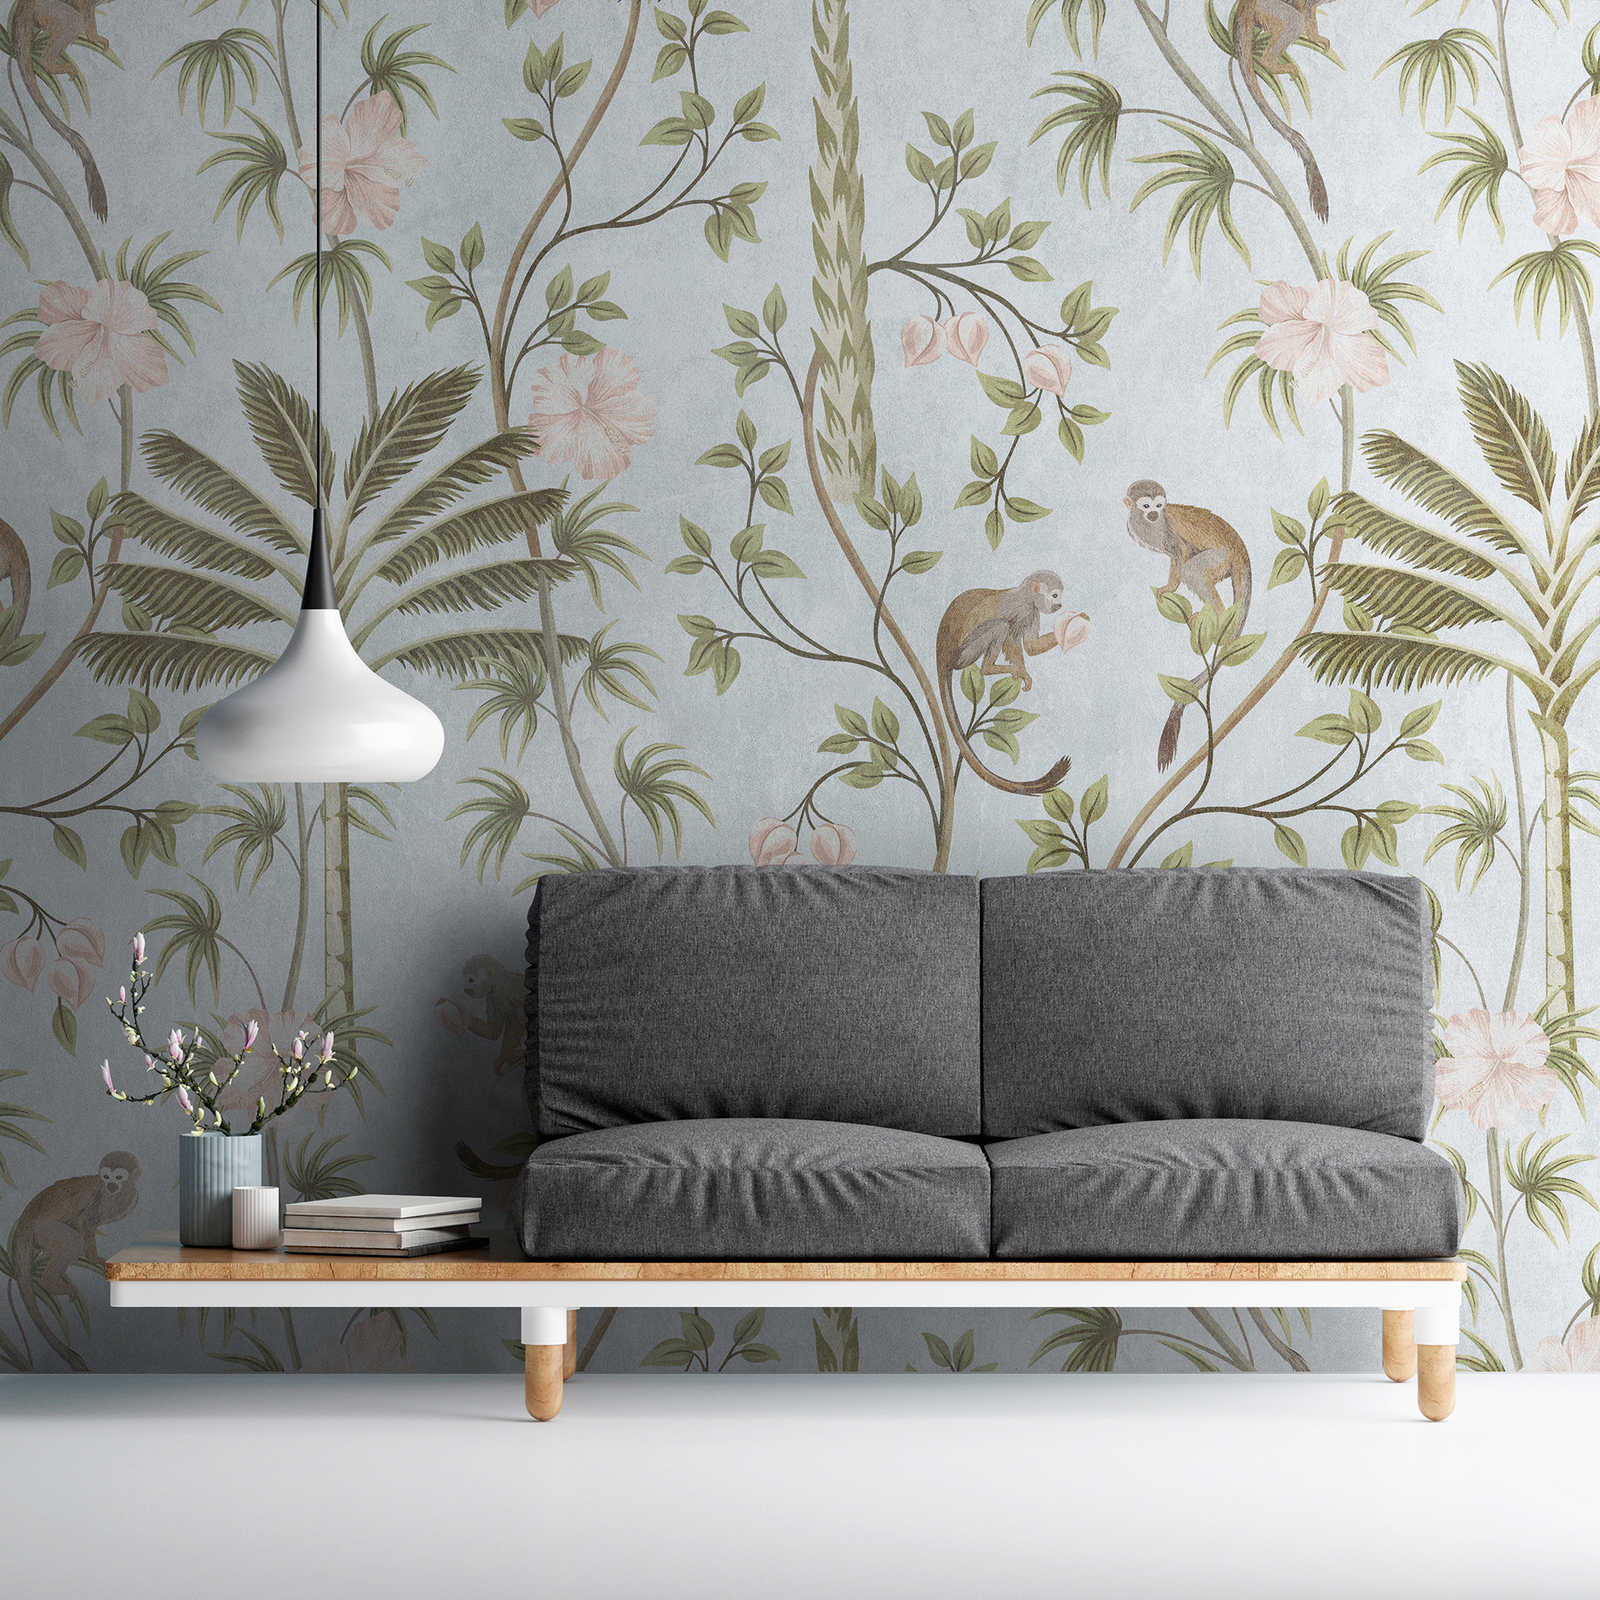 Wallpaper novelty | jungle wallpaper with palm trees & monkeys motif
